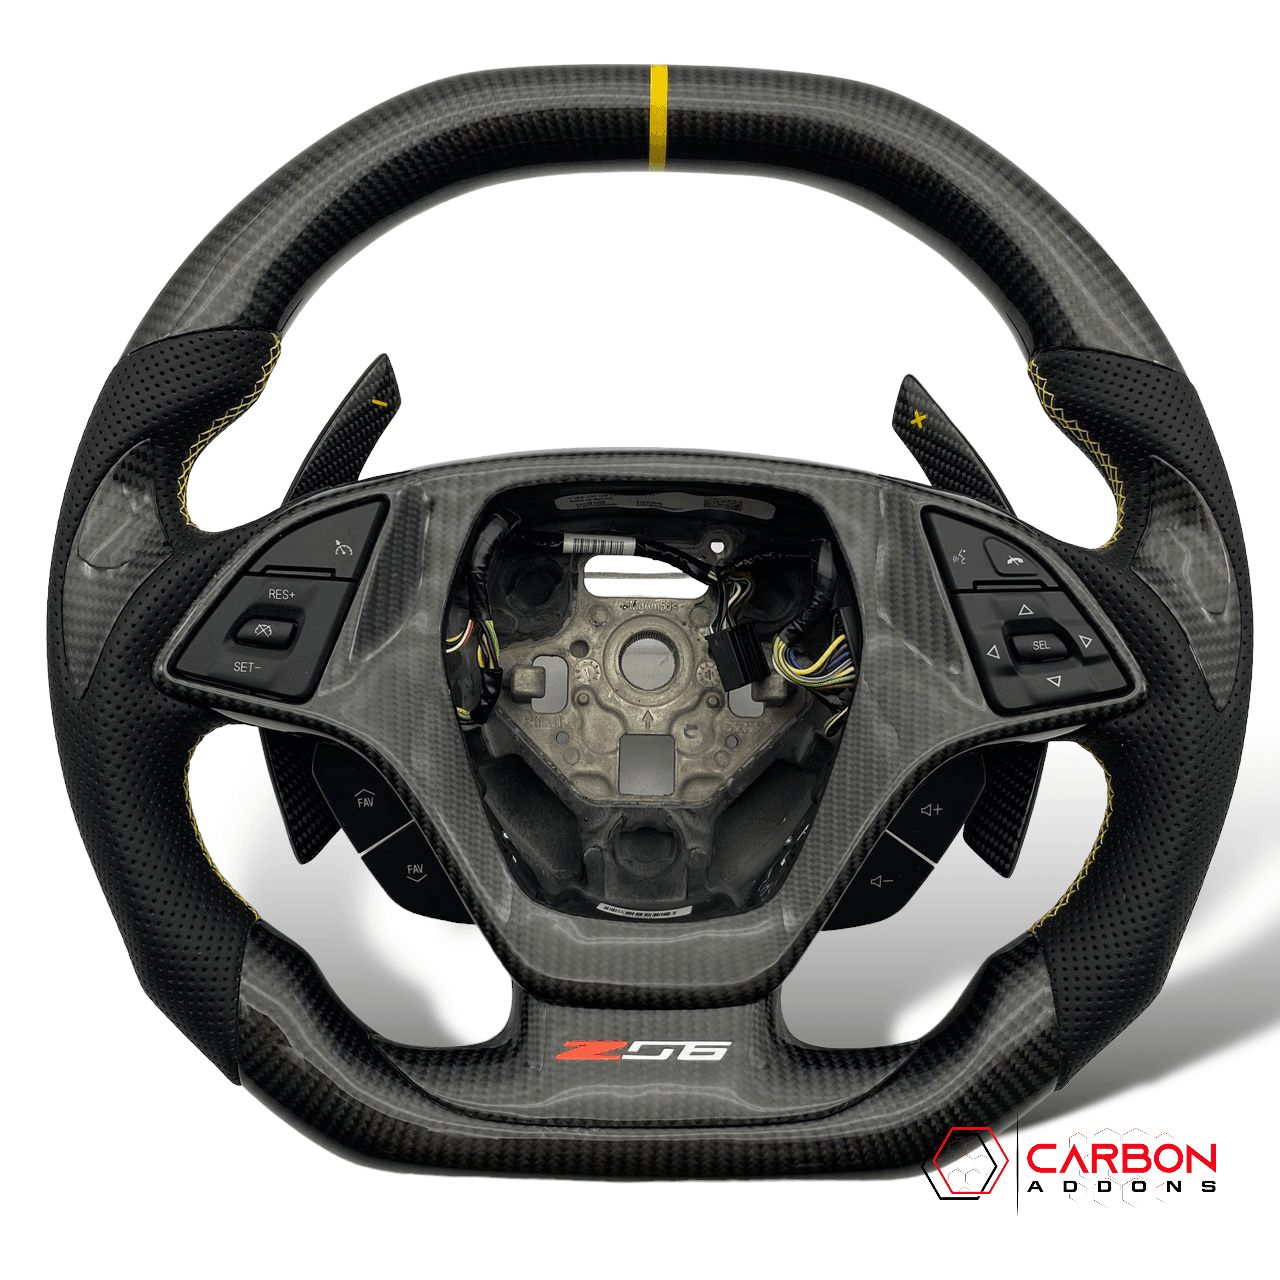 C7 Corvette (2014-2019) - carbonaddons Carbon Fiber Parts, Accessories, Upgrades, Mods